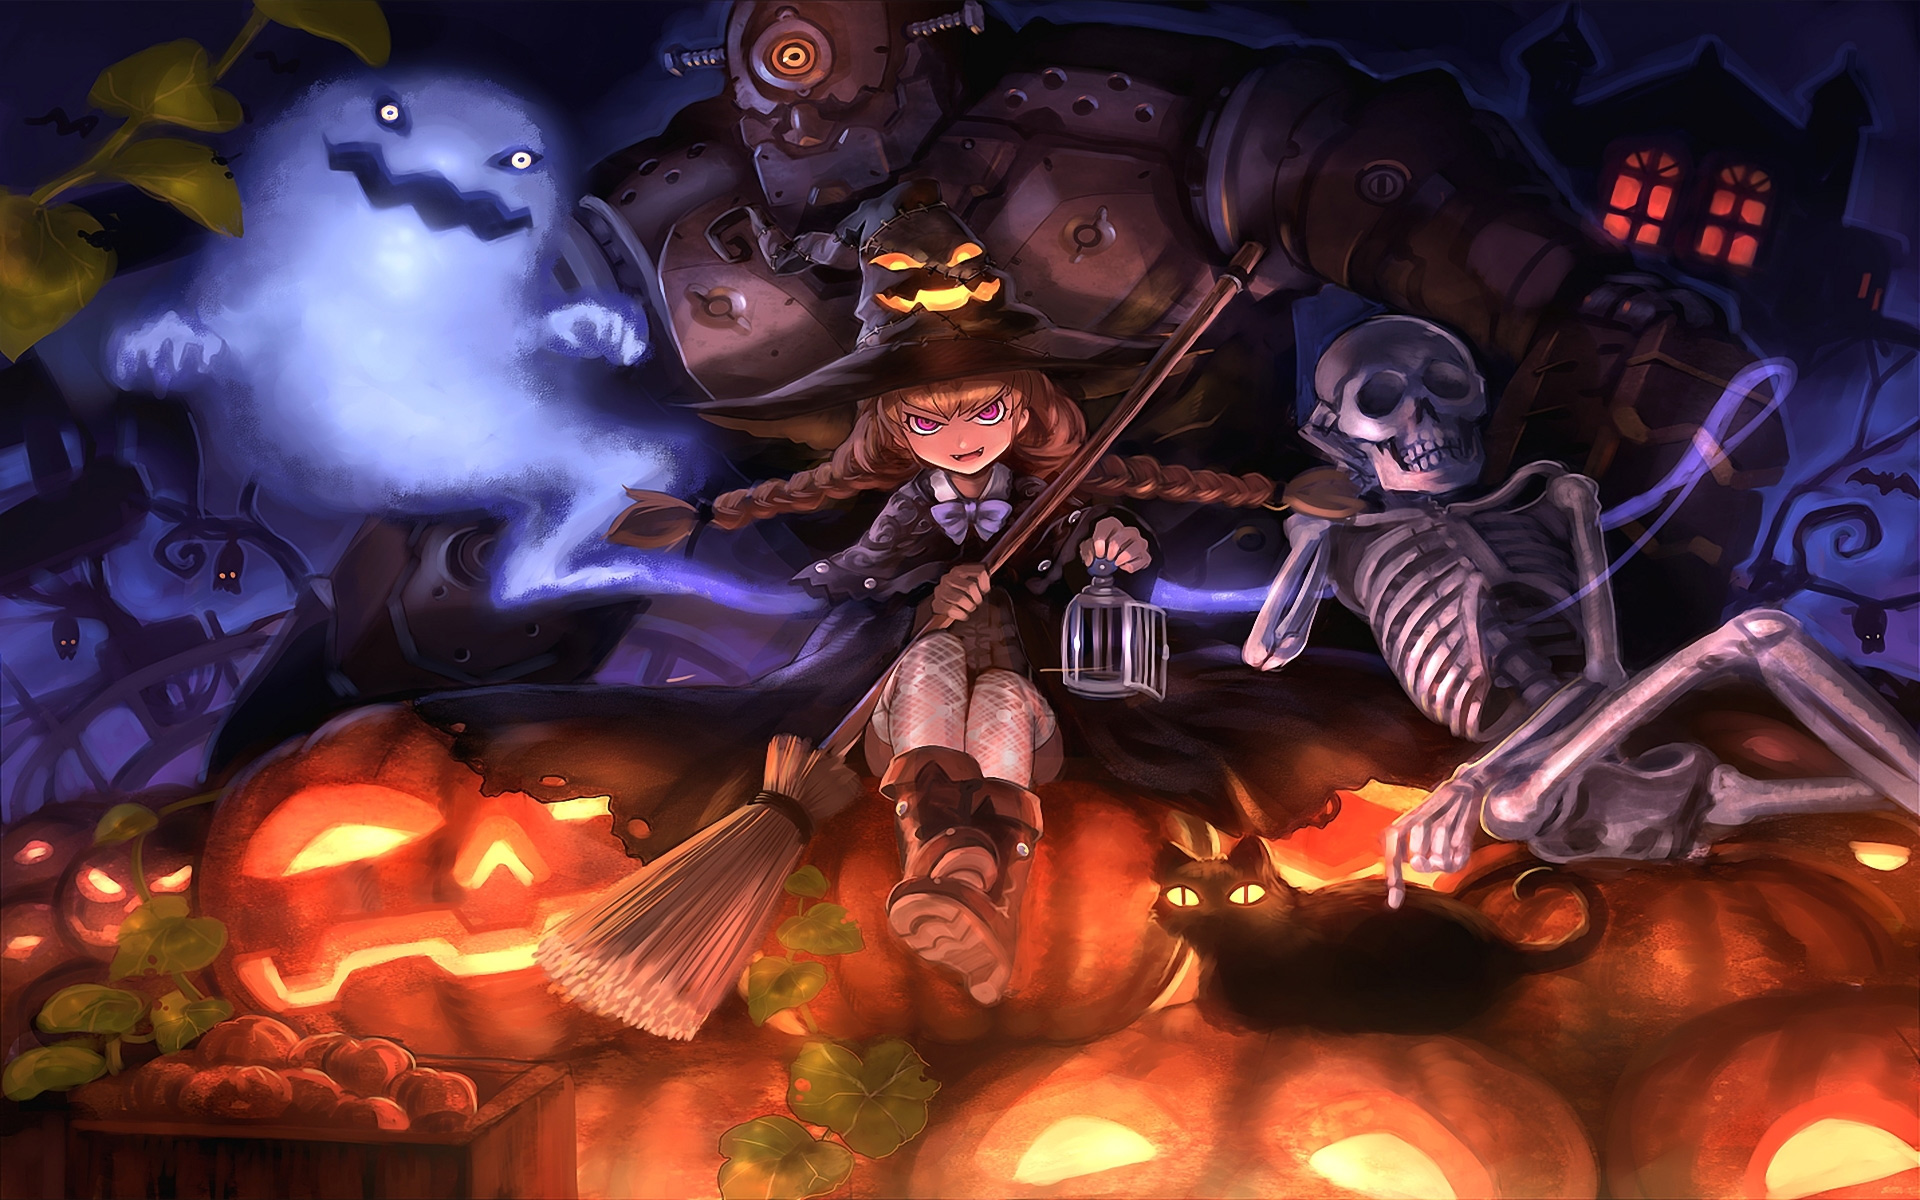 Ittle Halloween Witch Puter Desktop Wallpaper Pictures Image